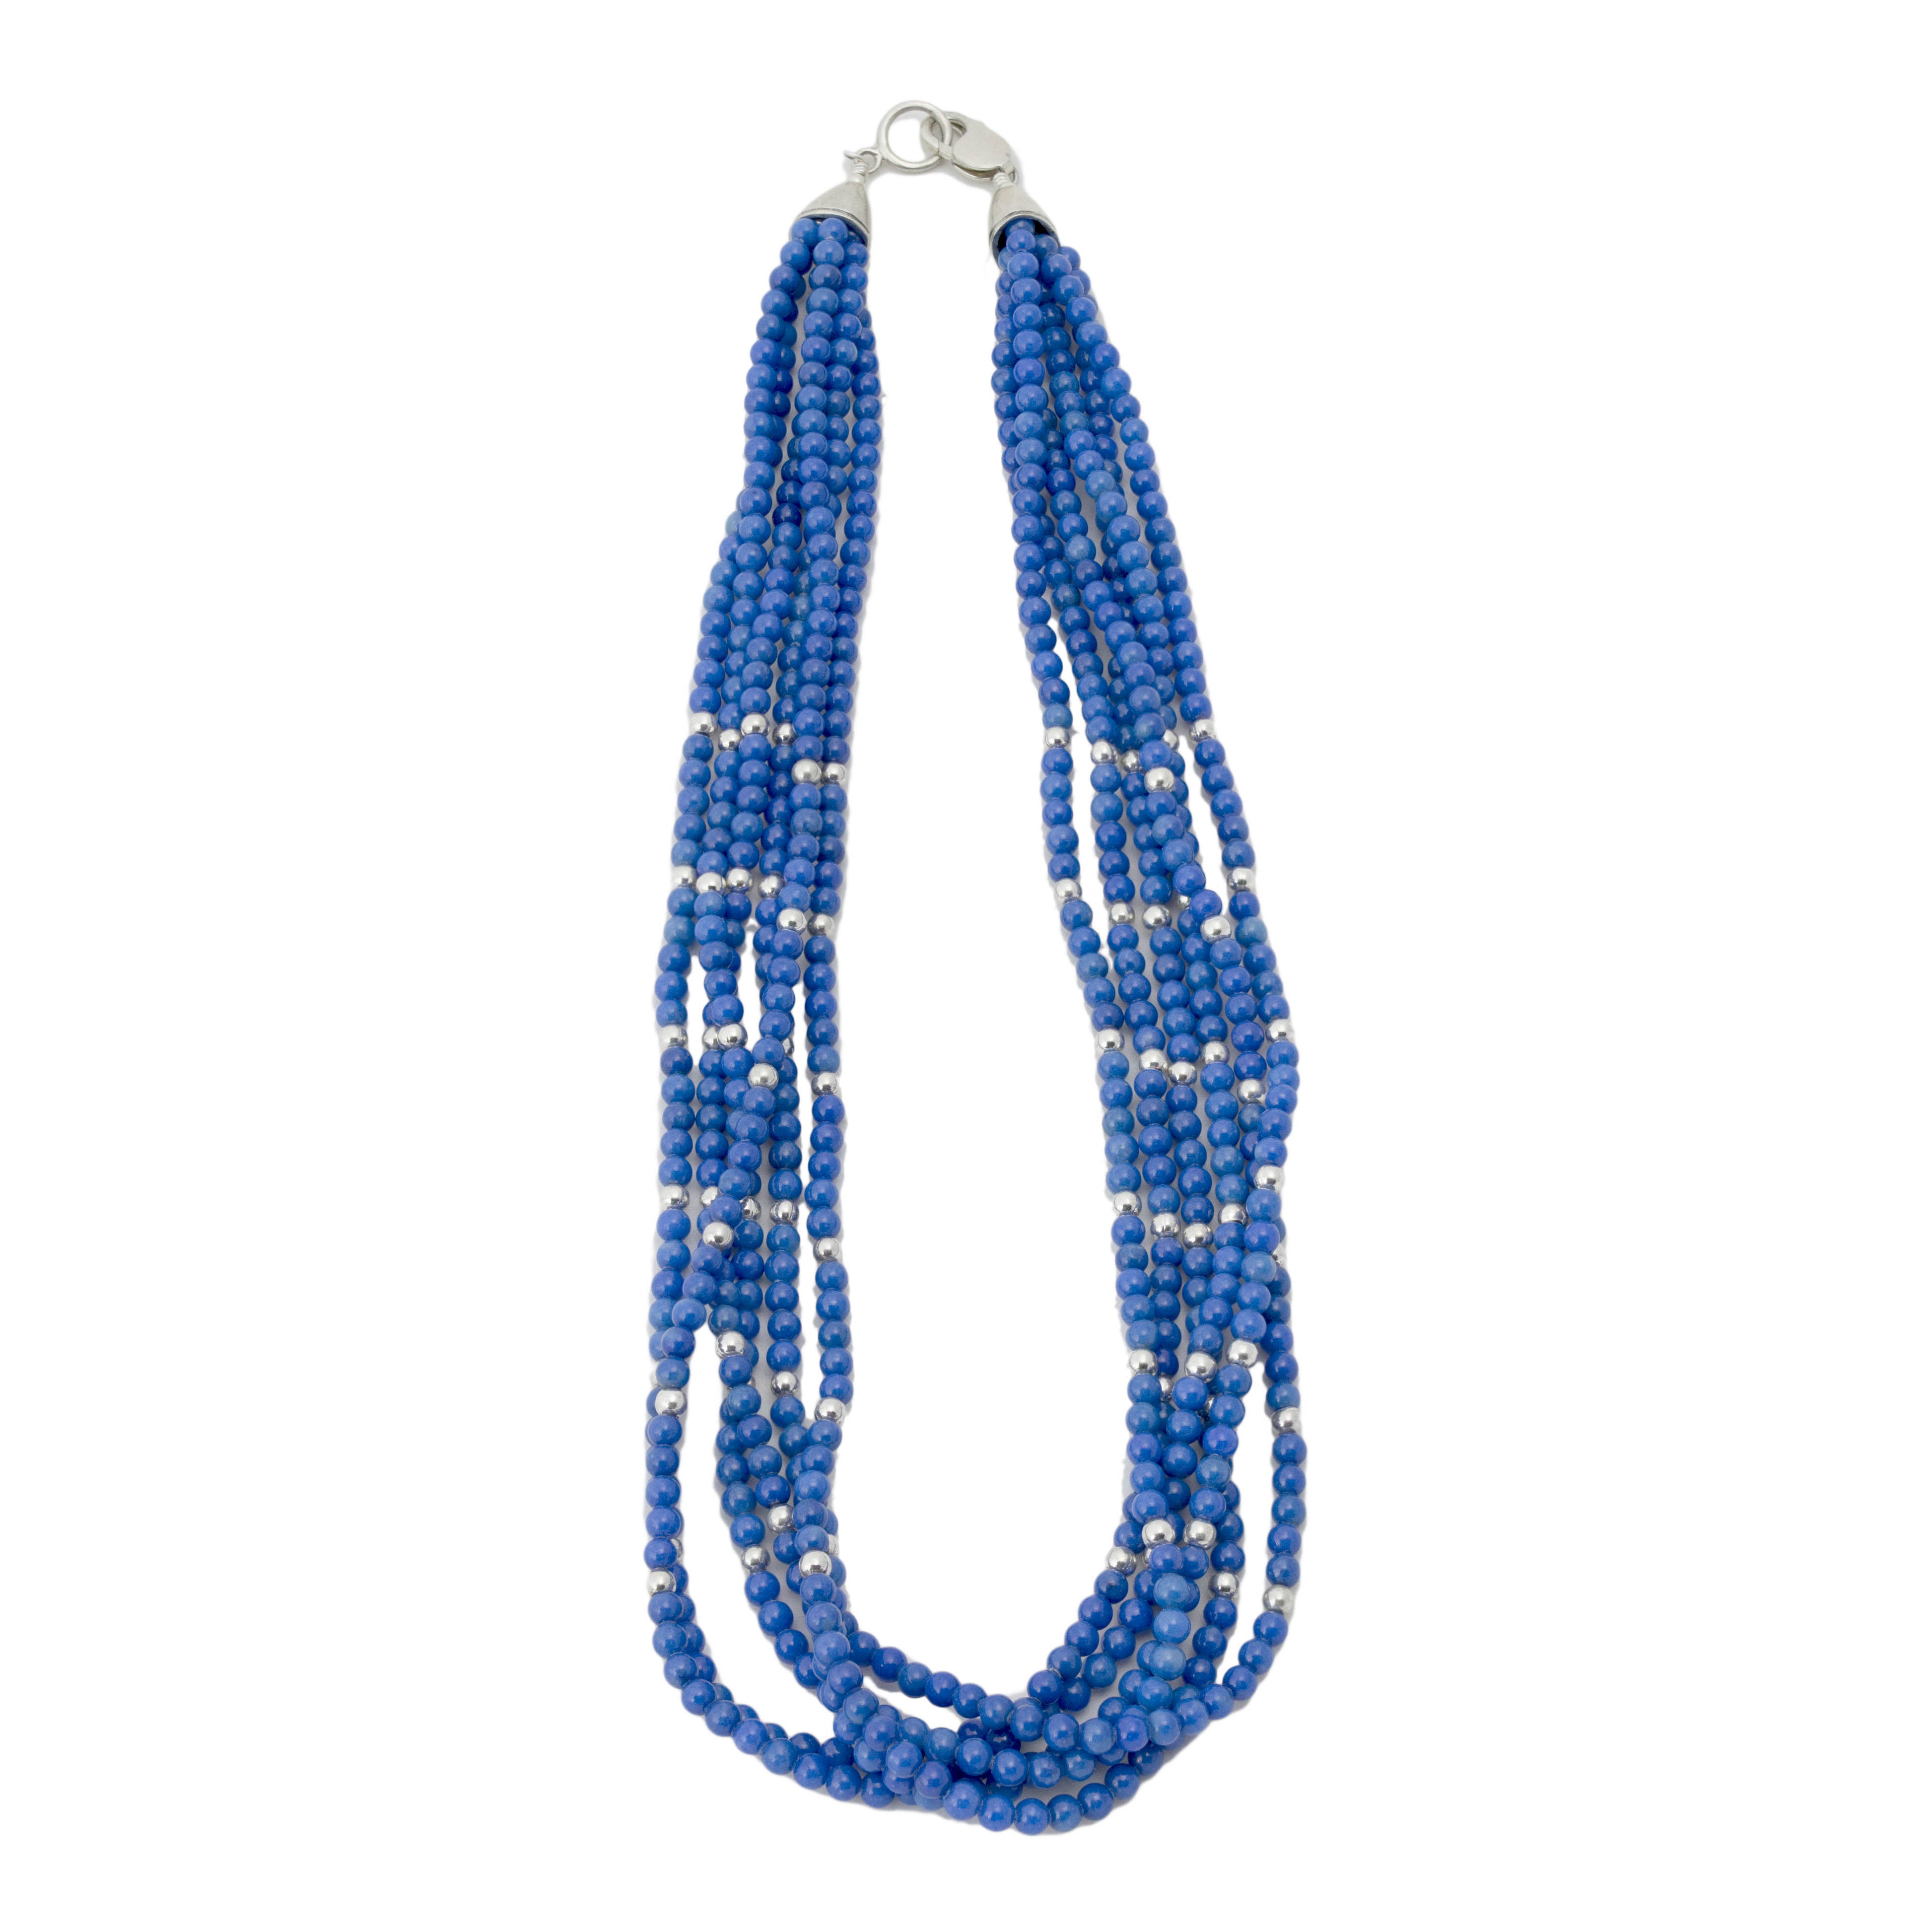 6 Strand Lapis Necklace, Jewelry, Necklace, Native